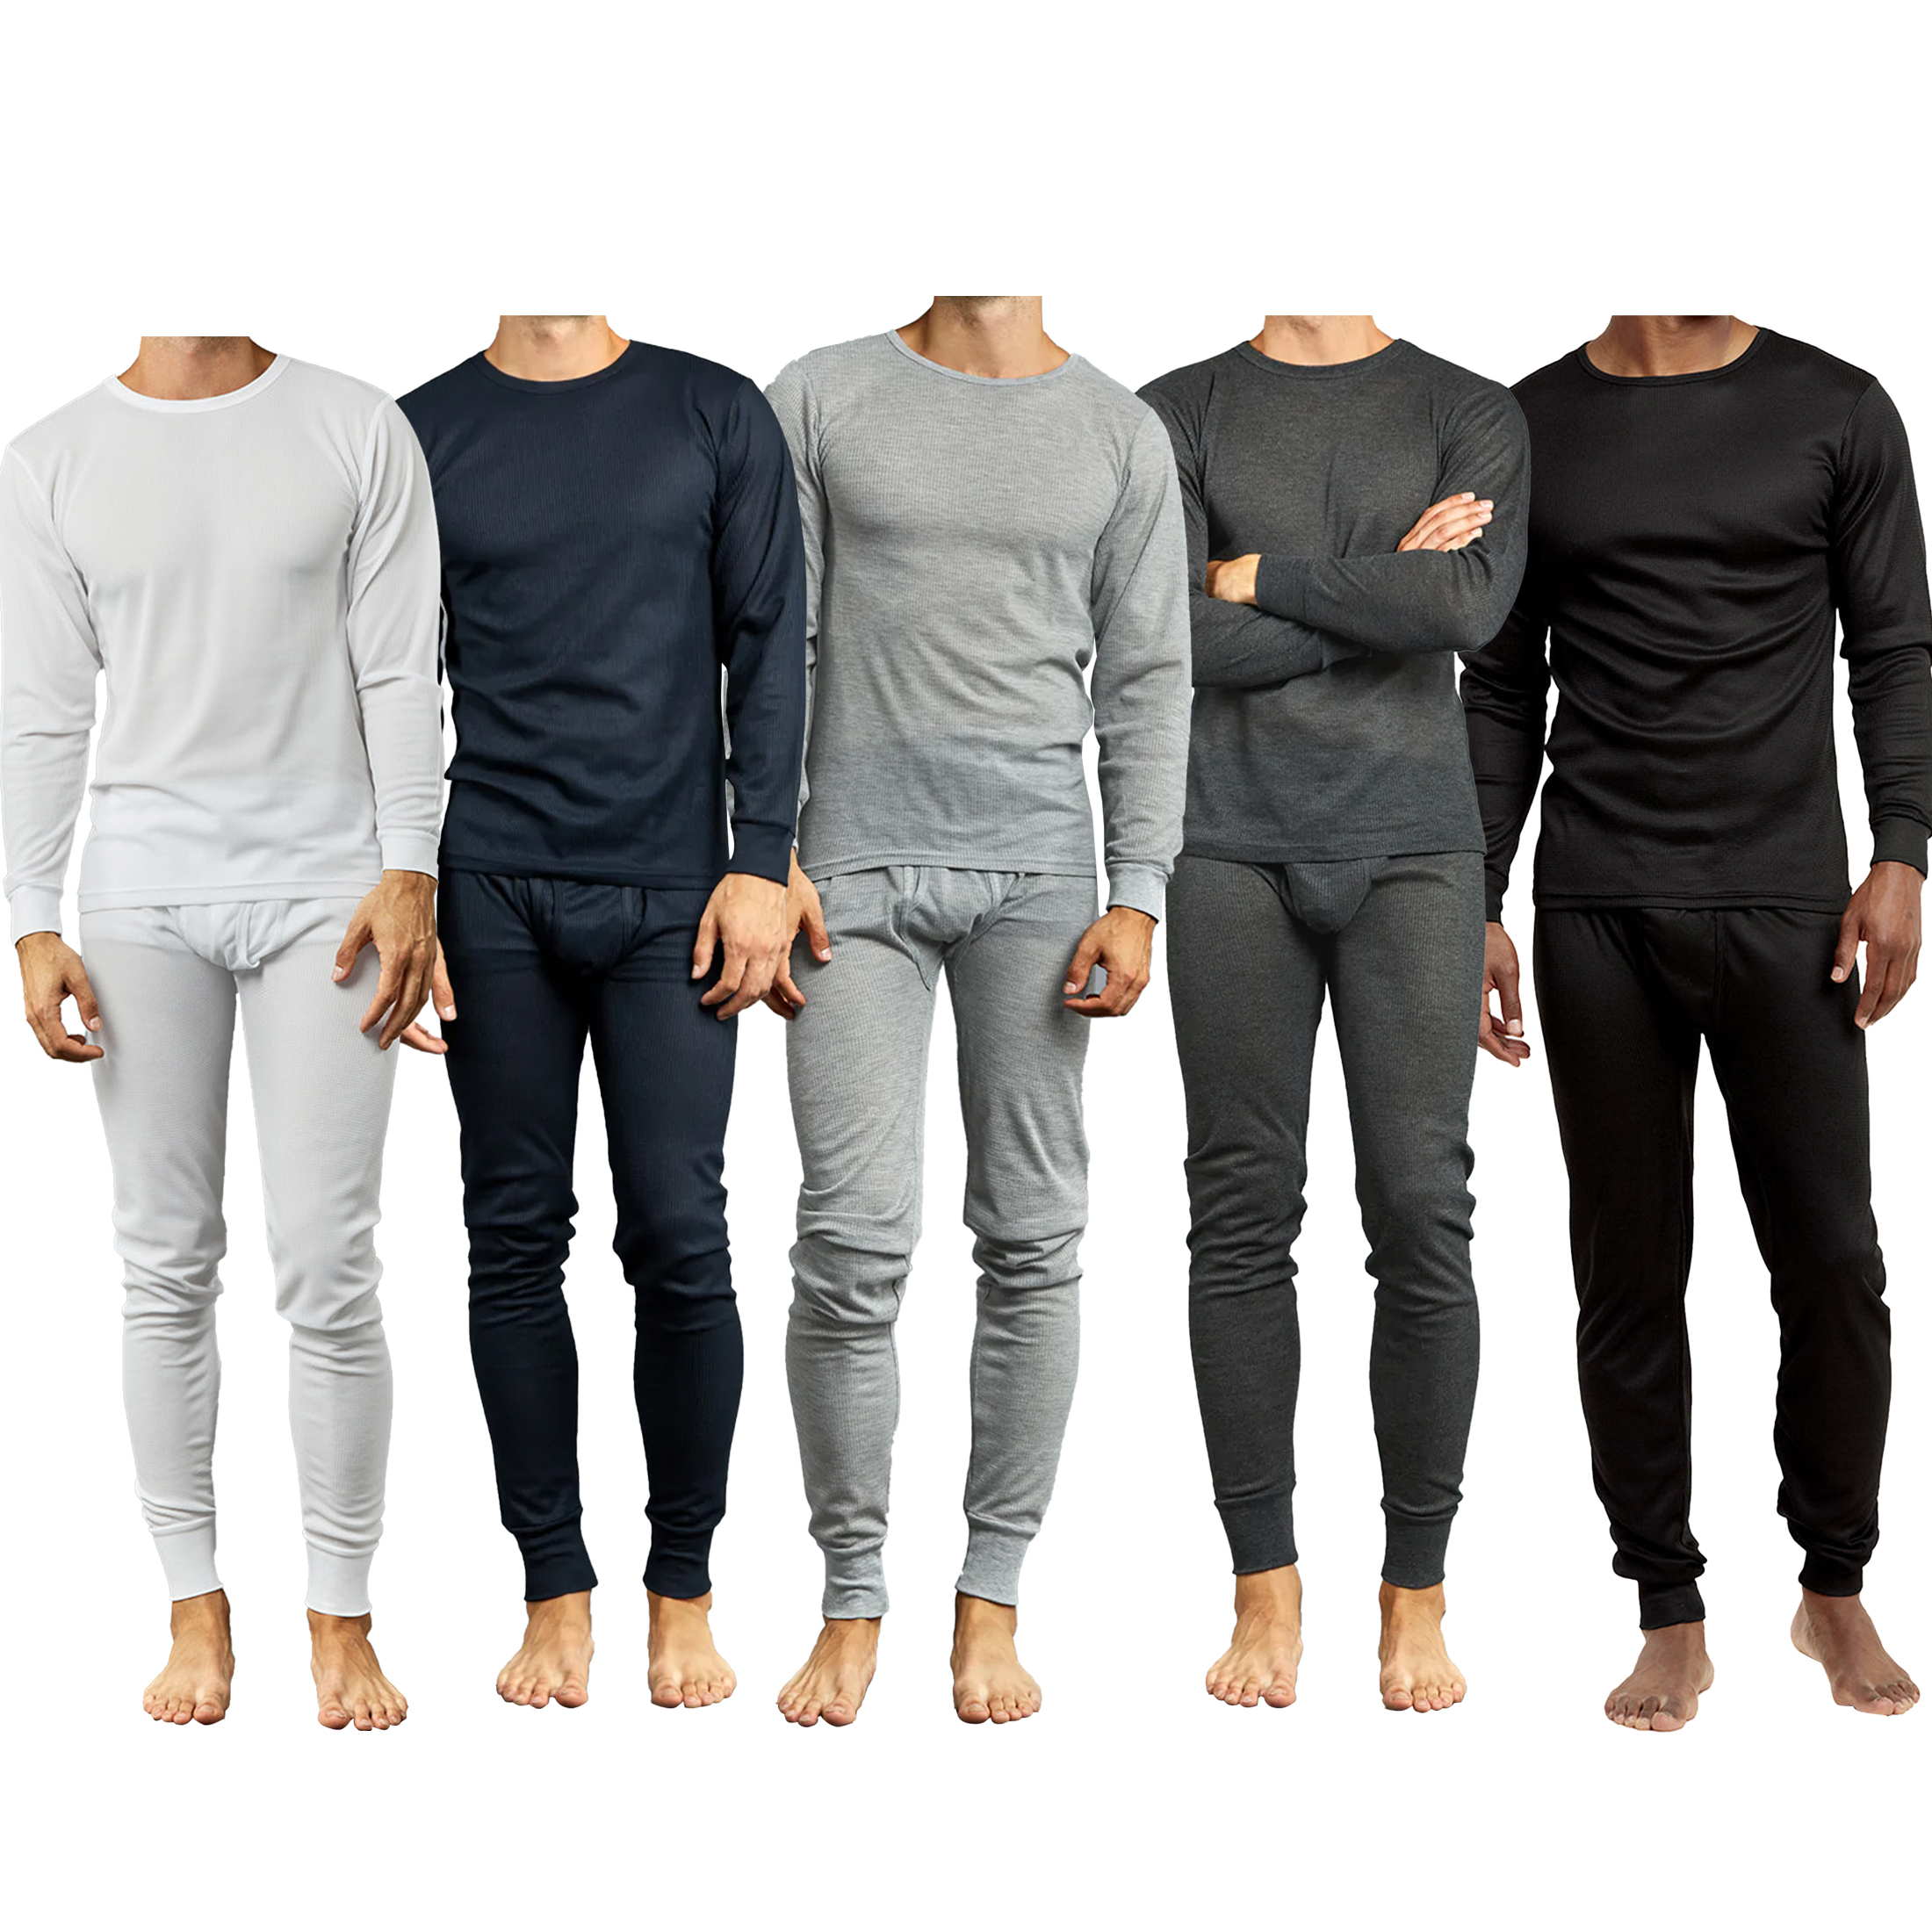 2-Piece: Men's Moisture Wicking Long Johns Base Layer Thermal Underwear Set (Top & Bottom) - White, X-Large